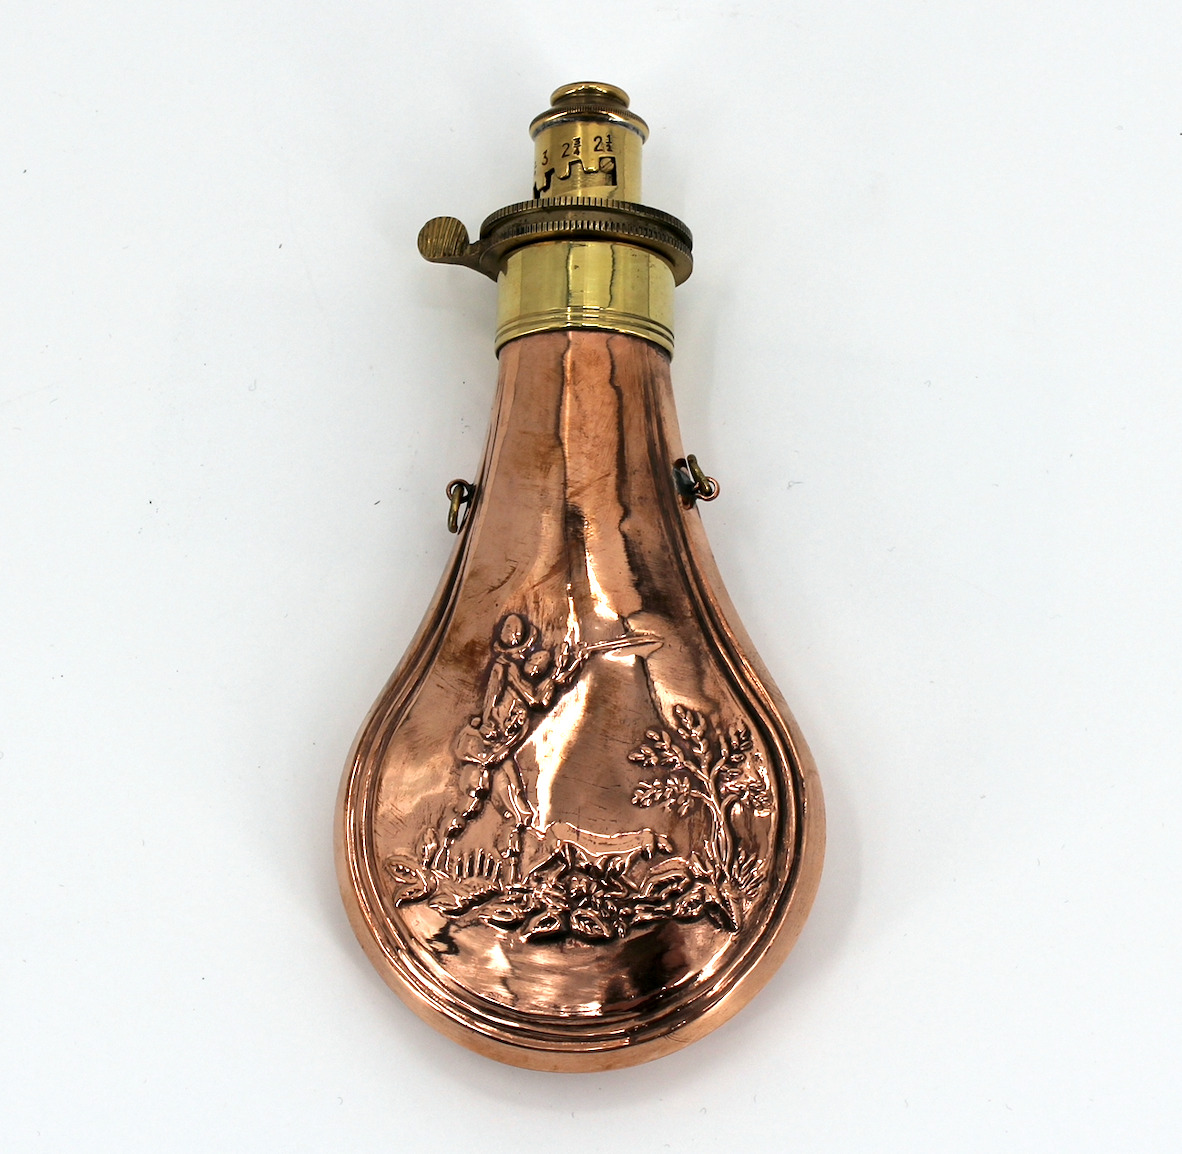 Copper Hawksley Style Gunpowder Flask - Flintlock Muzzleloader, Reenactment